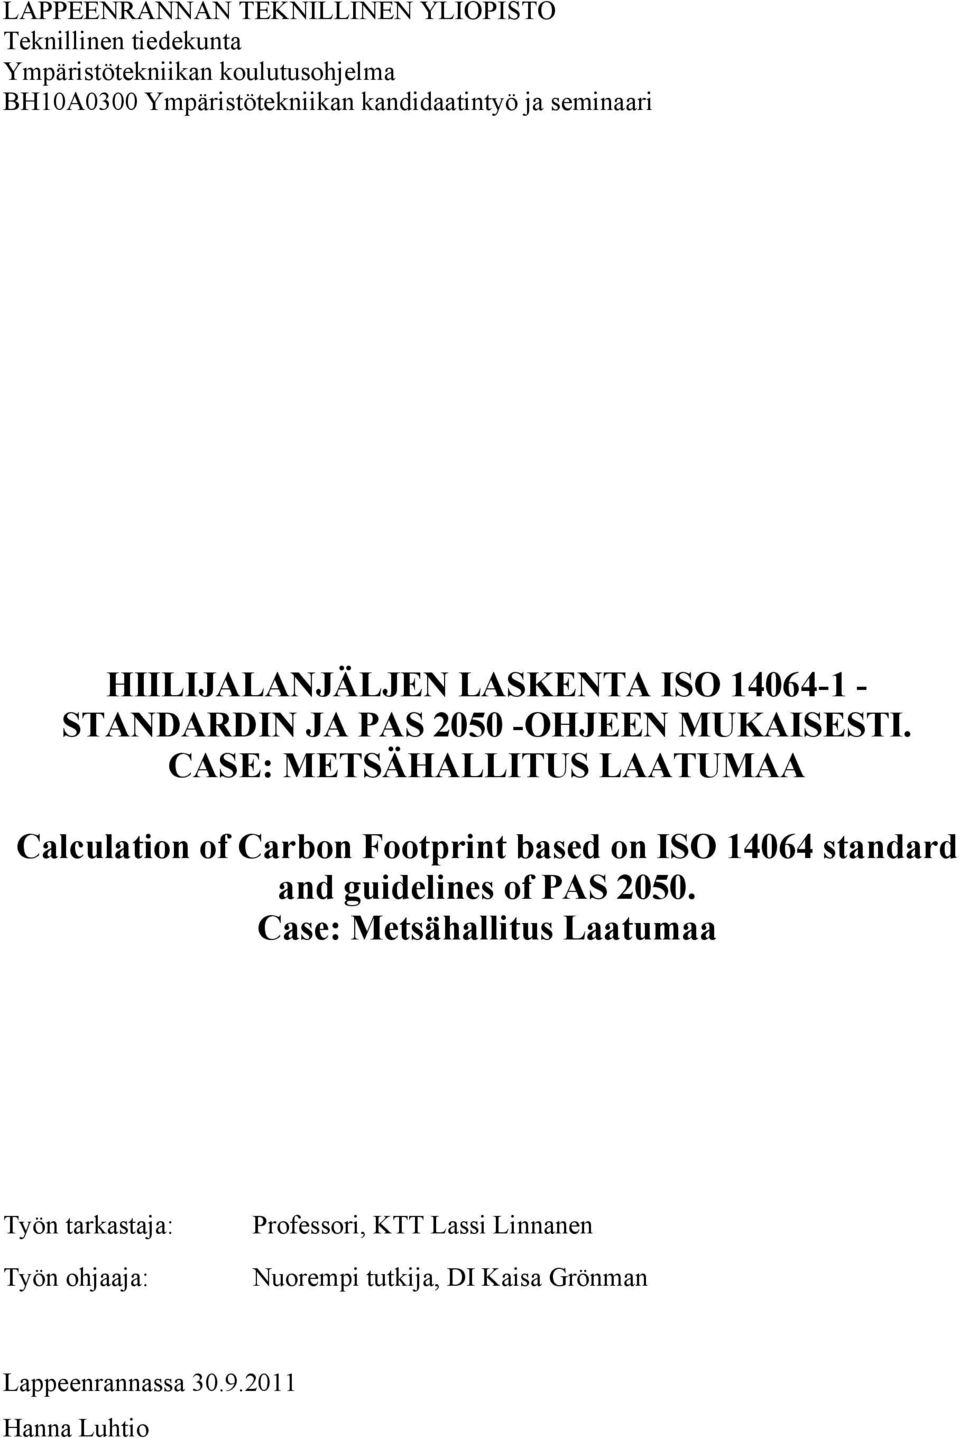 CASE: METSÄHALLITUS LAATUMAA Calculation of Carbon Footprint based on ISO 14064 standard and guidelines of PAS 2050.